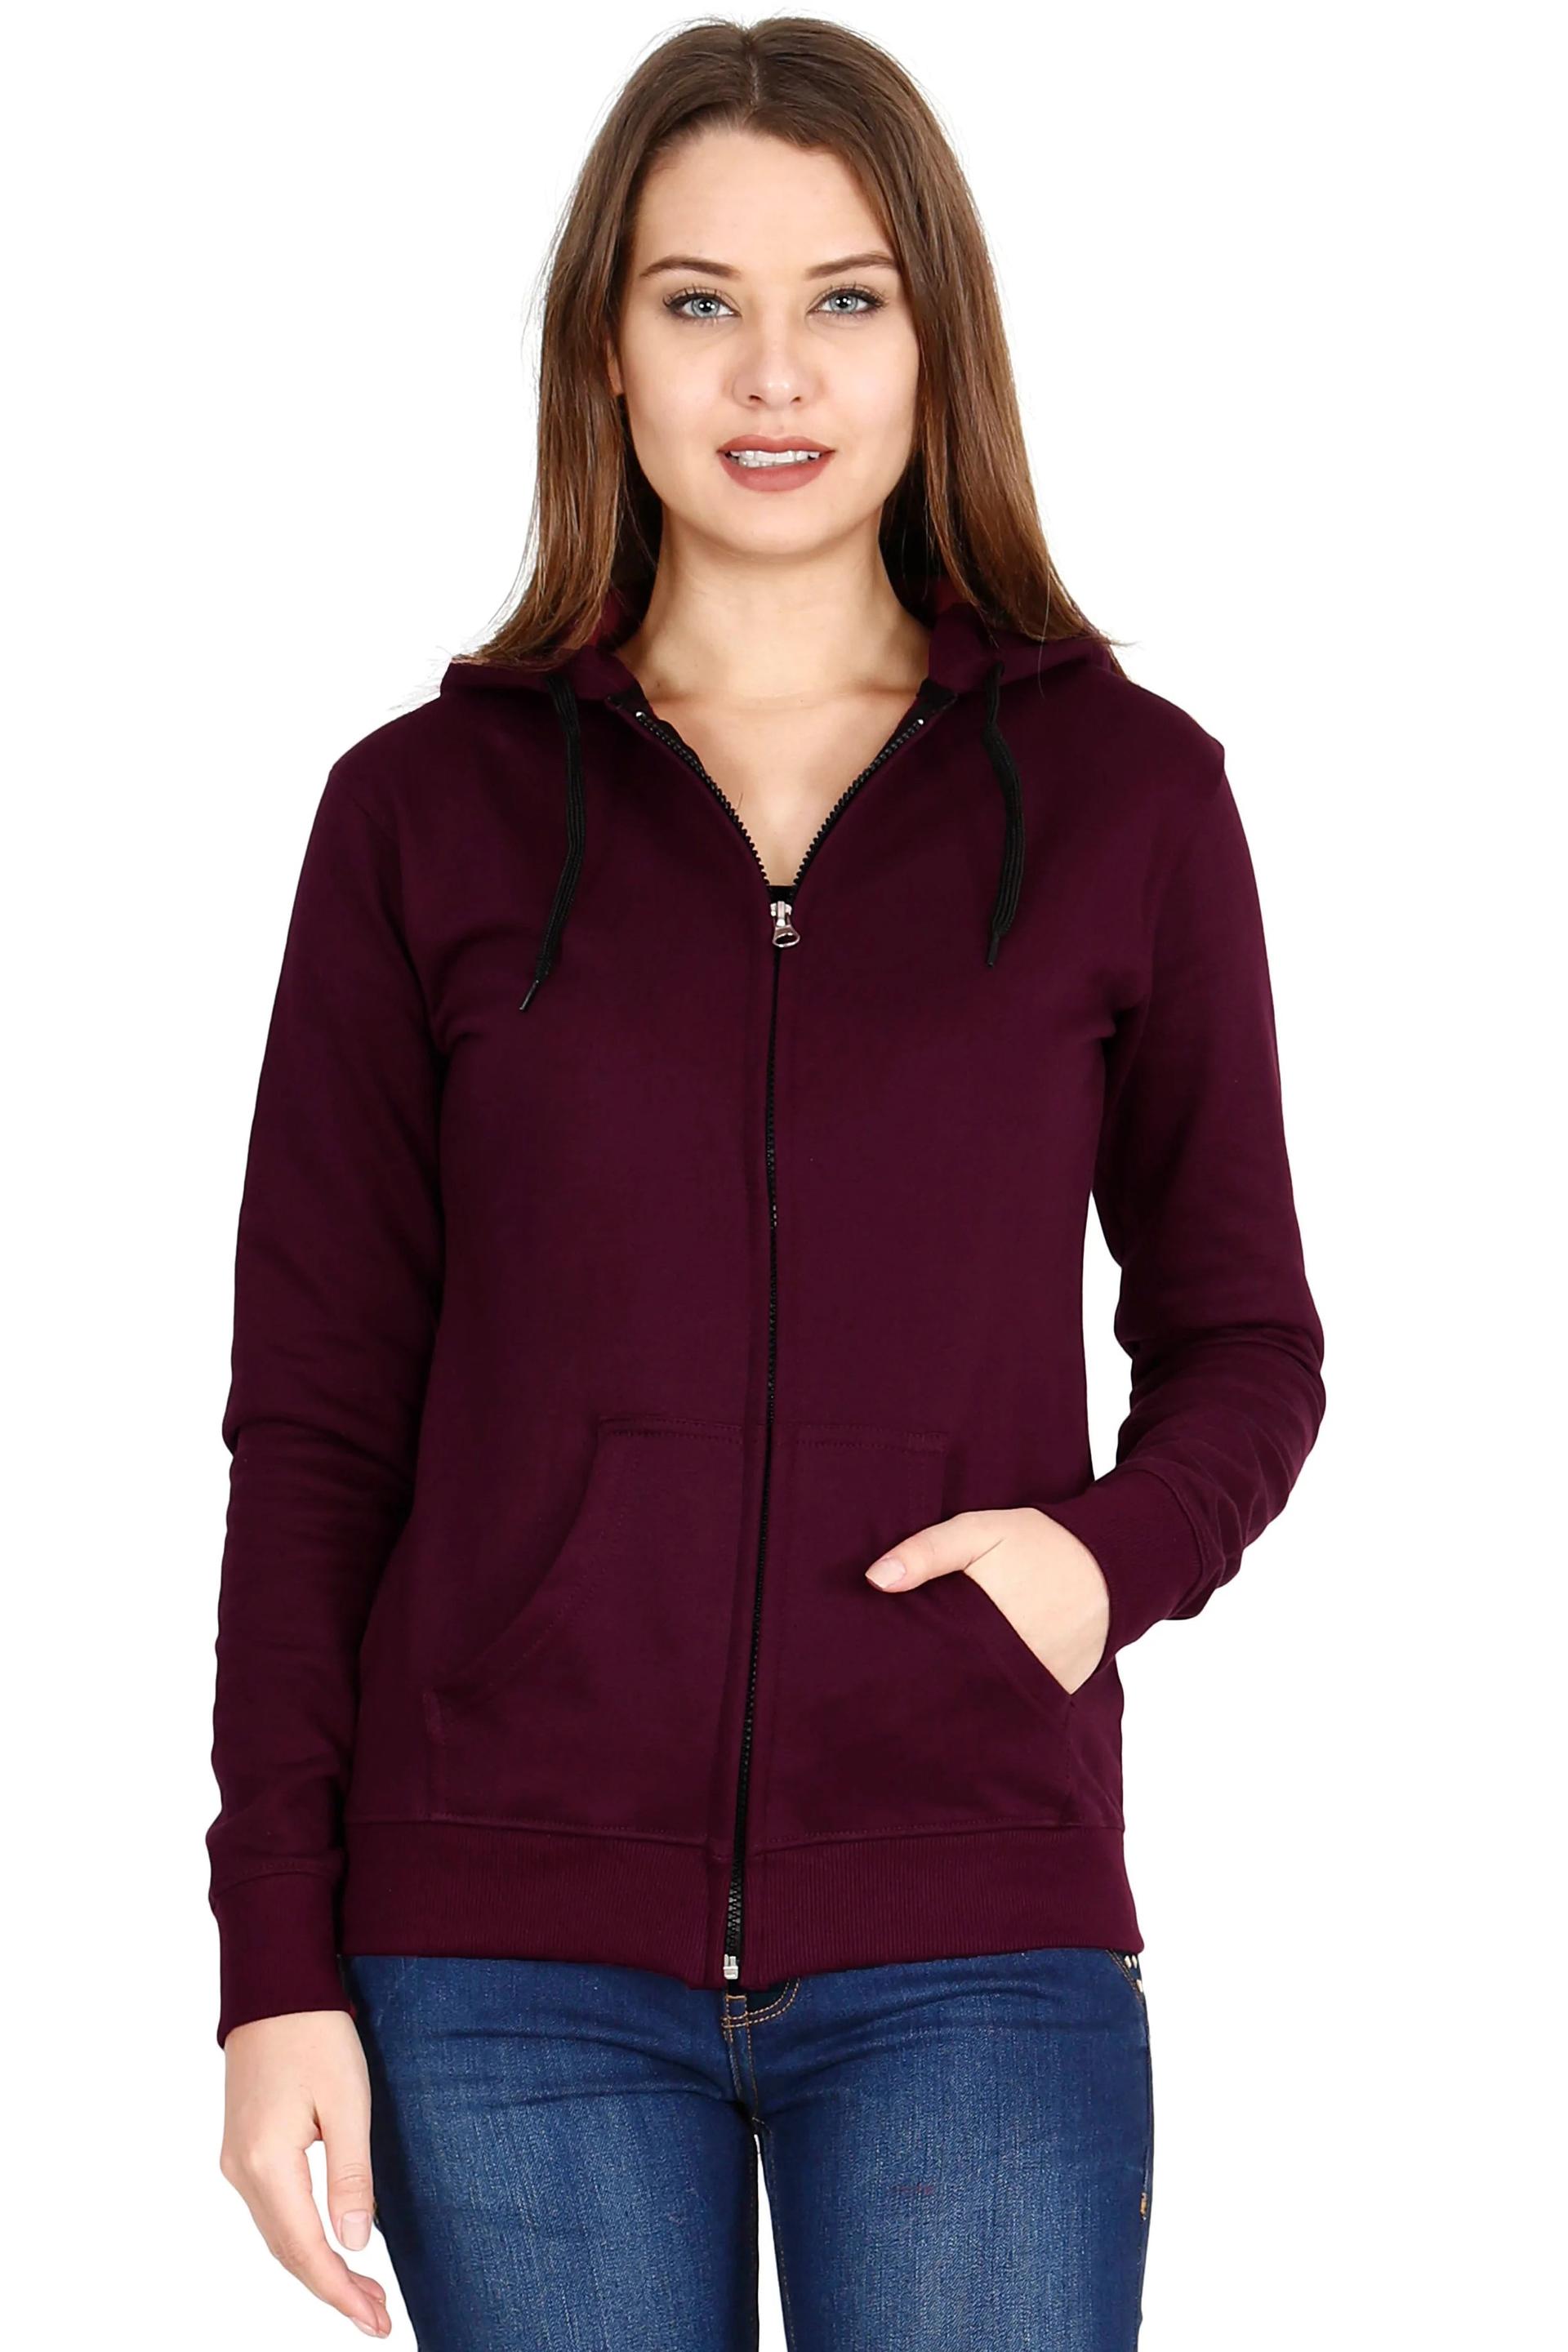 women's cotton plain full sleeve hoodies/sweatshirt